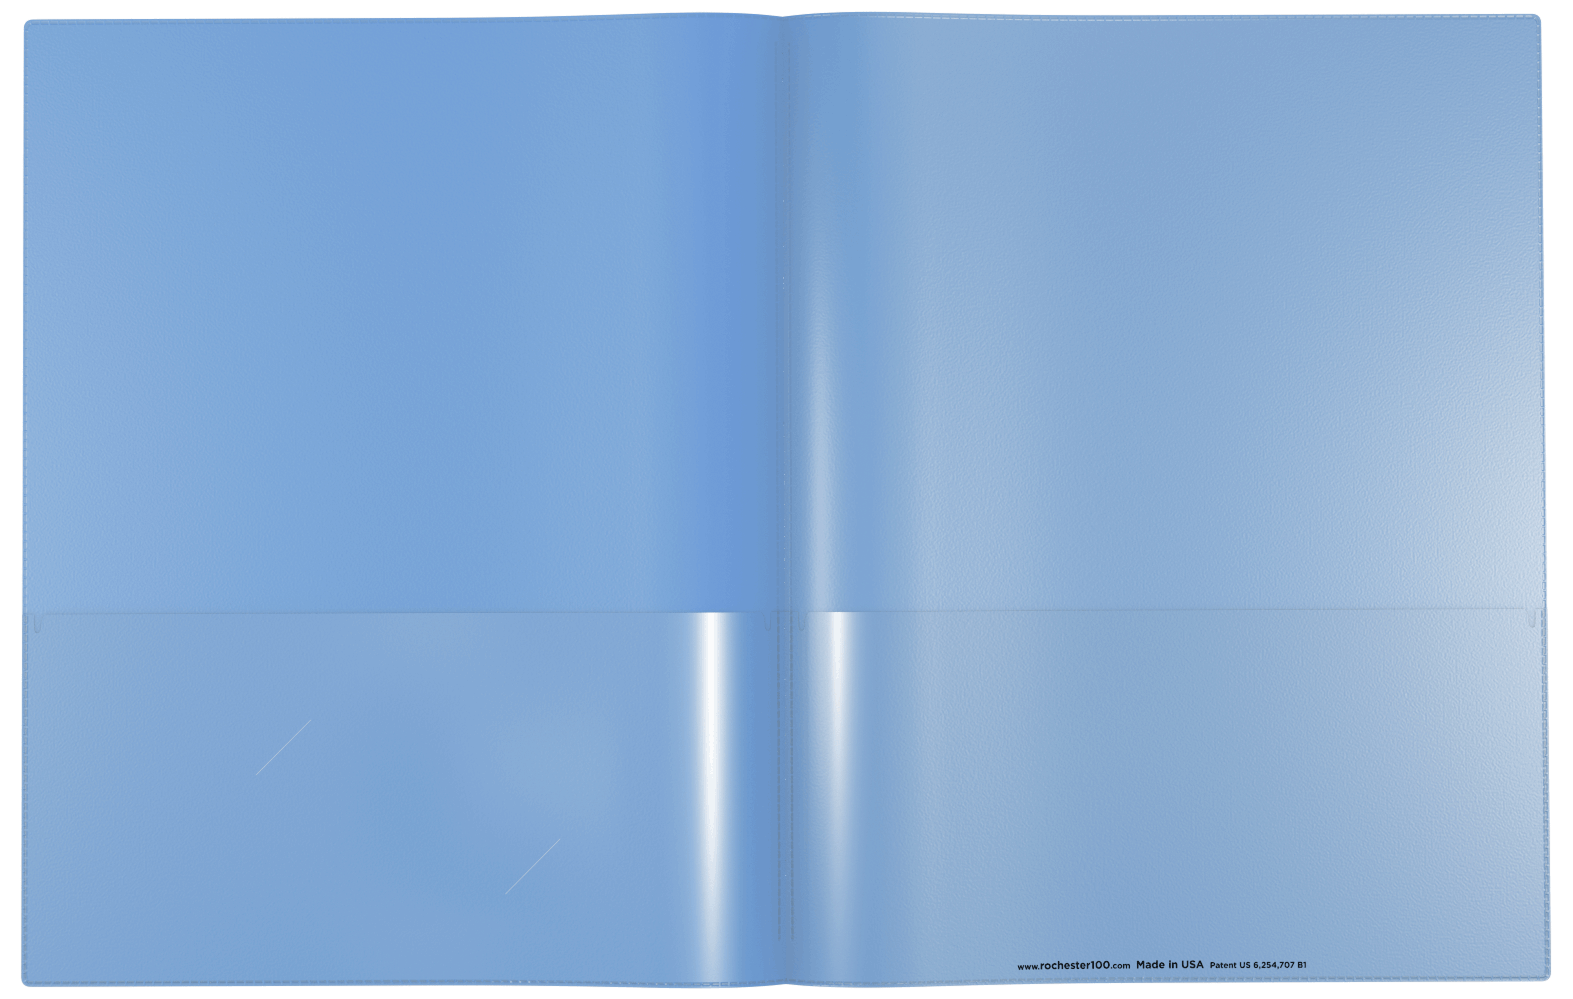 Nicky's Version 2 Folder - Durable Vinyl 2 Pocket Plastic Presentation Folder with Clear Sleeves